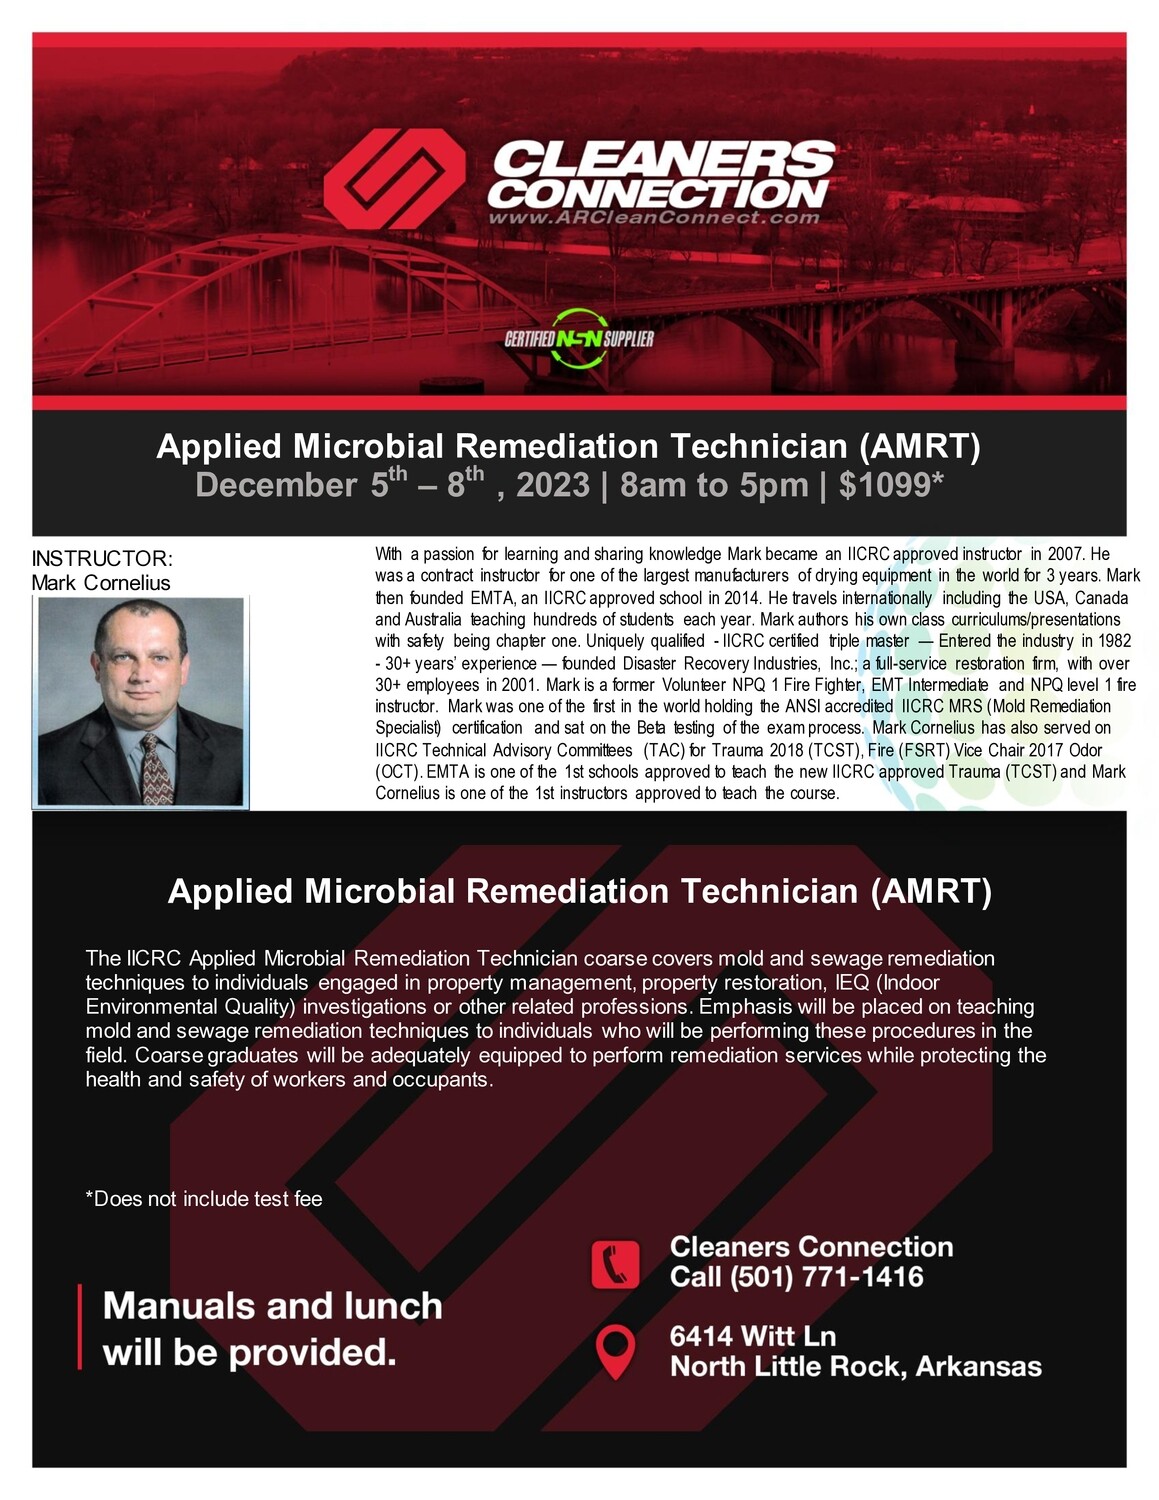 IICRC AMRT - Applied Microbial Remediation Technician Class 12-5-2023